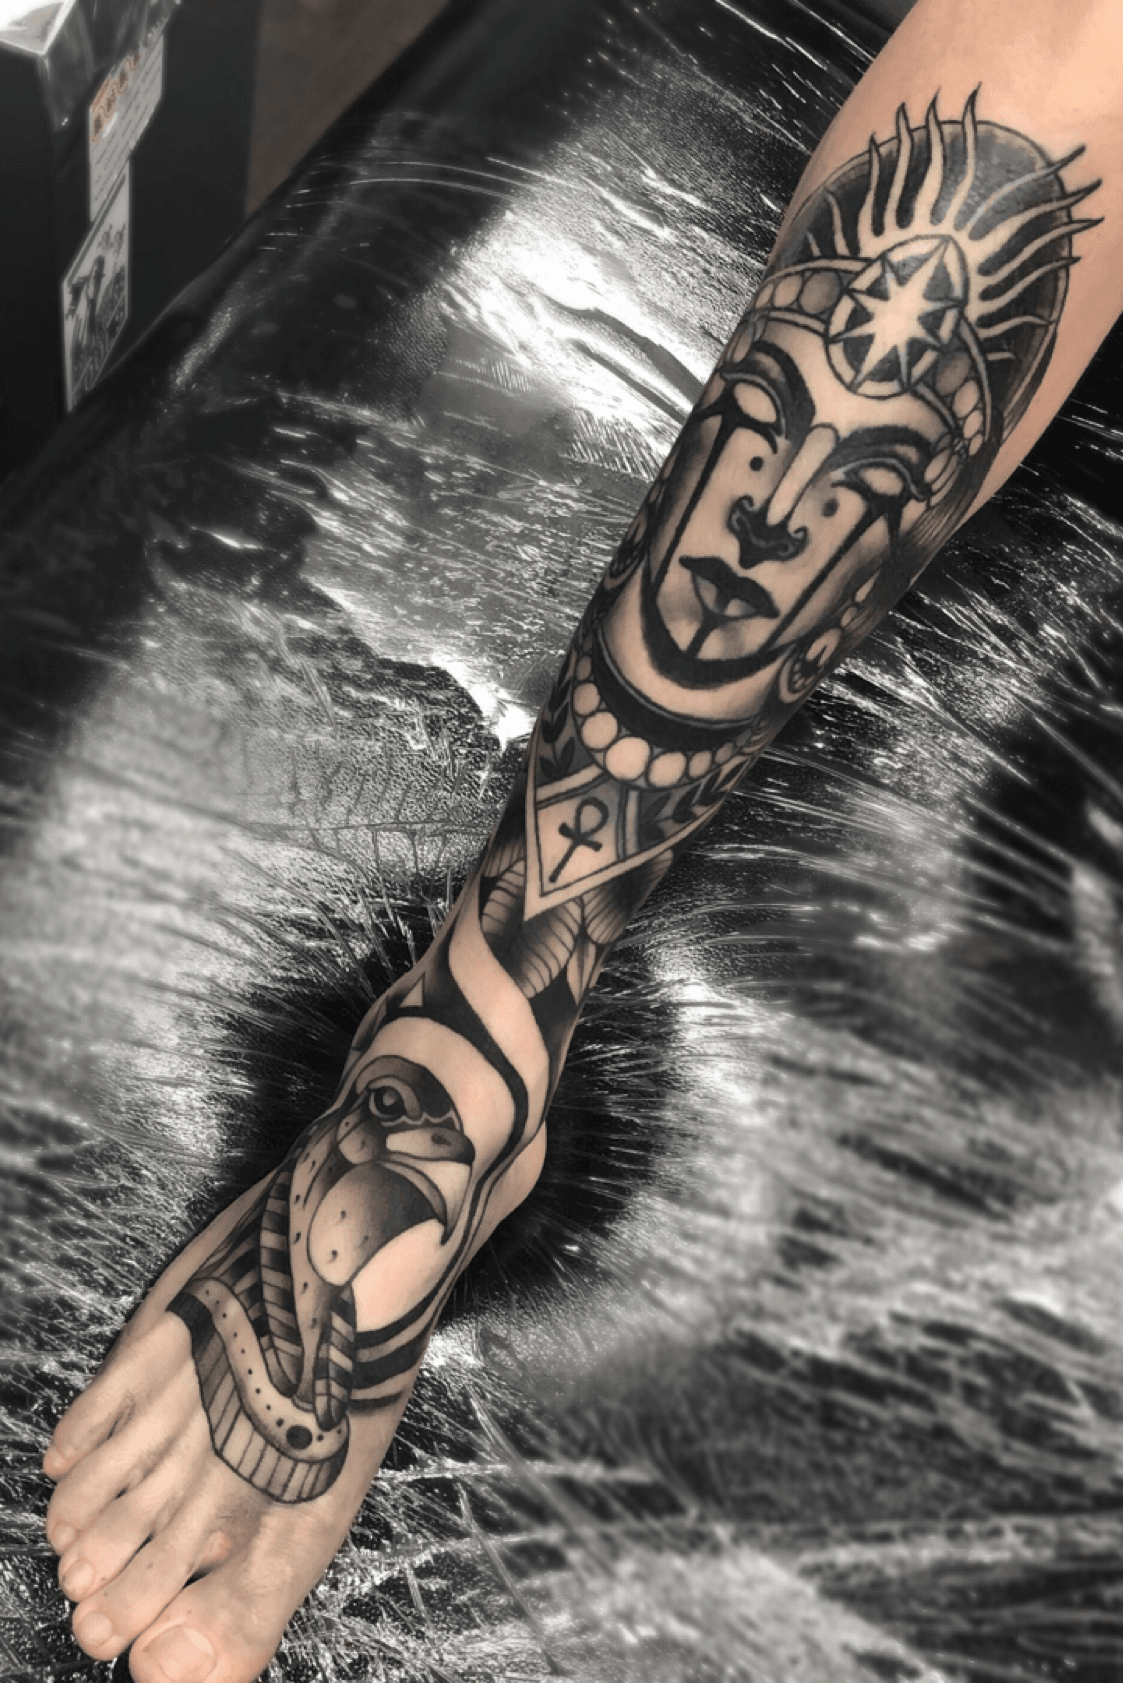 Three sessionsleg sleeve in progress tattoo tattooart art artist  tattooideas egipto tattoolovers tattoosleeve ink inked  Instagram